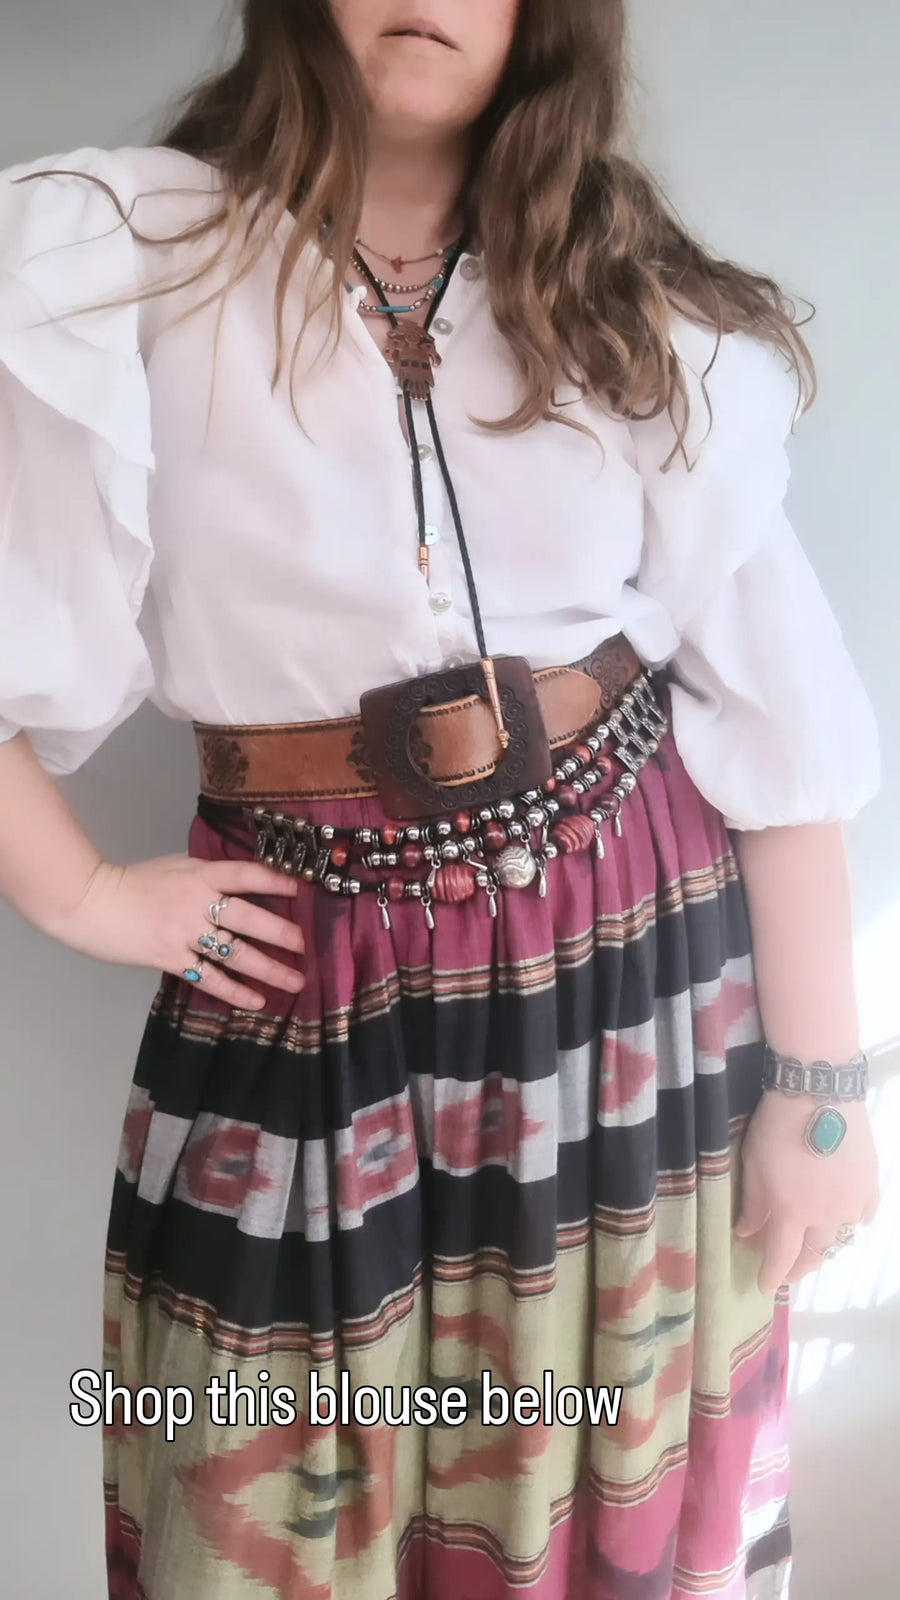 MONSOON Multicoloured Vintage Indian Boho Midi Skirt size M 10/12